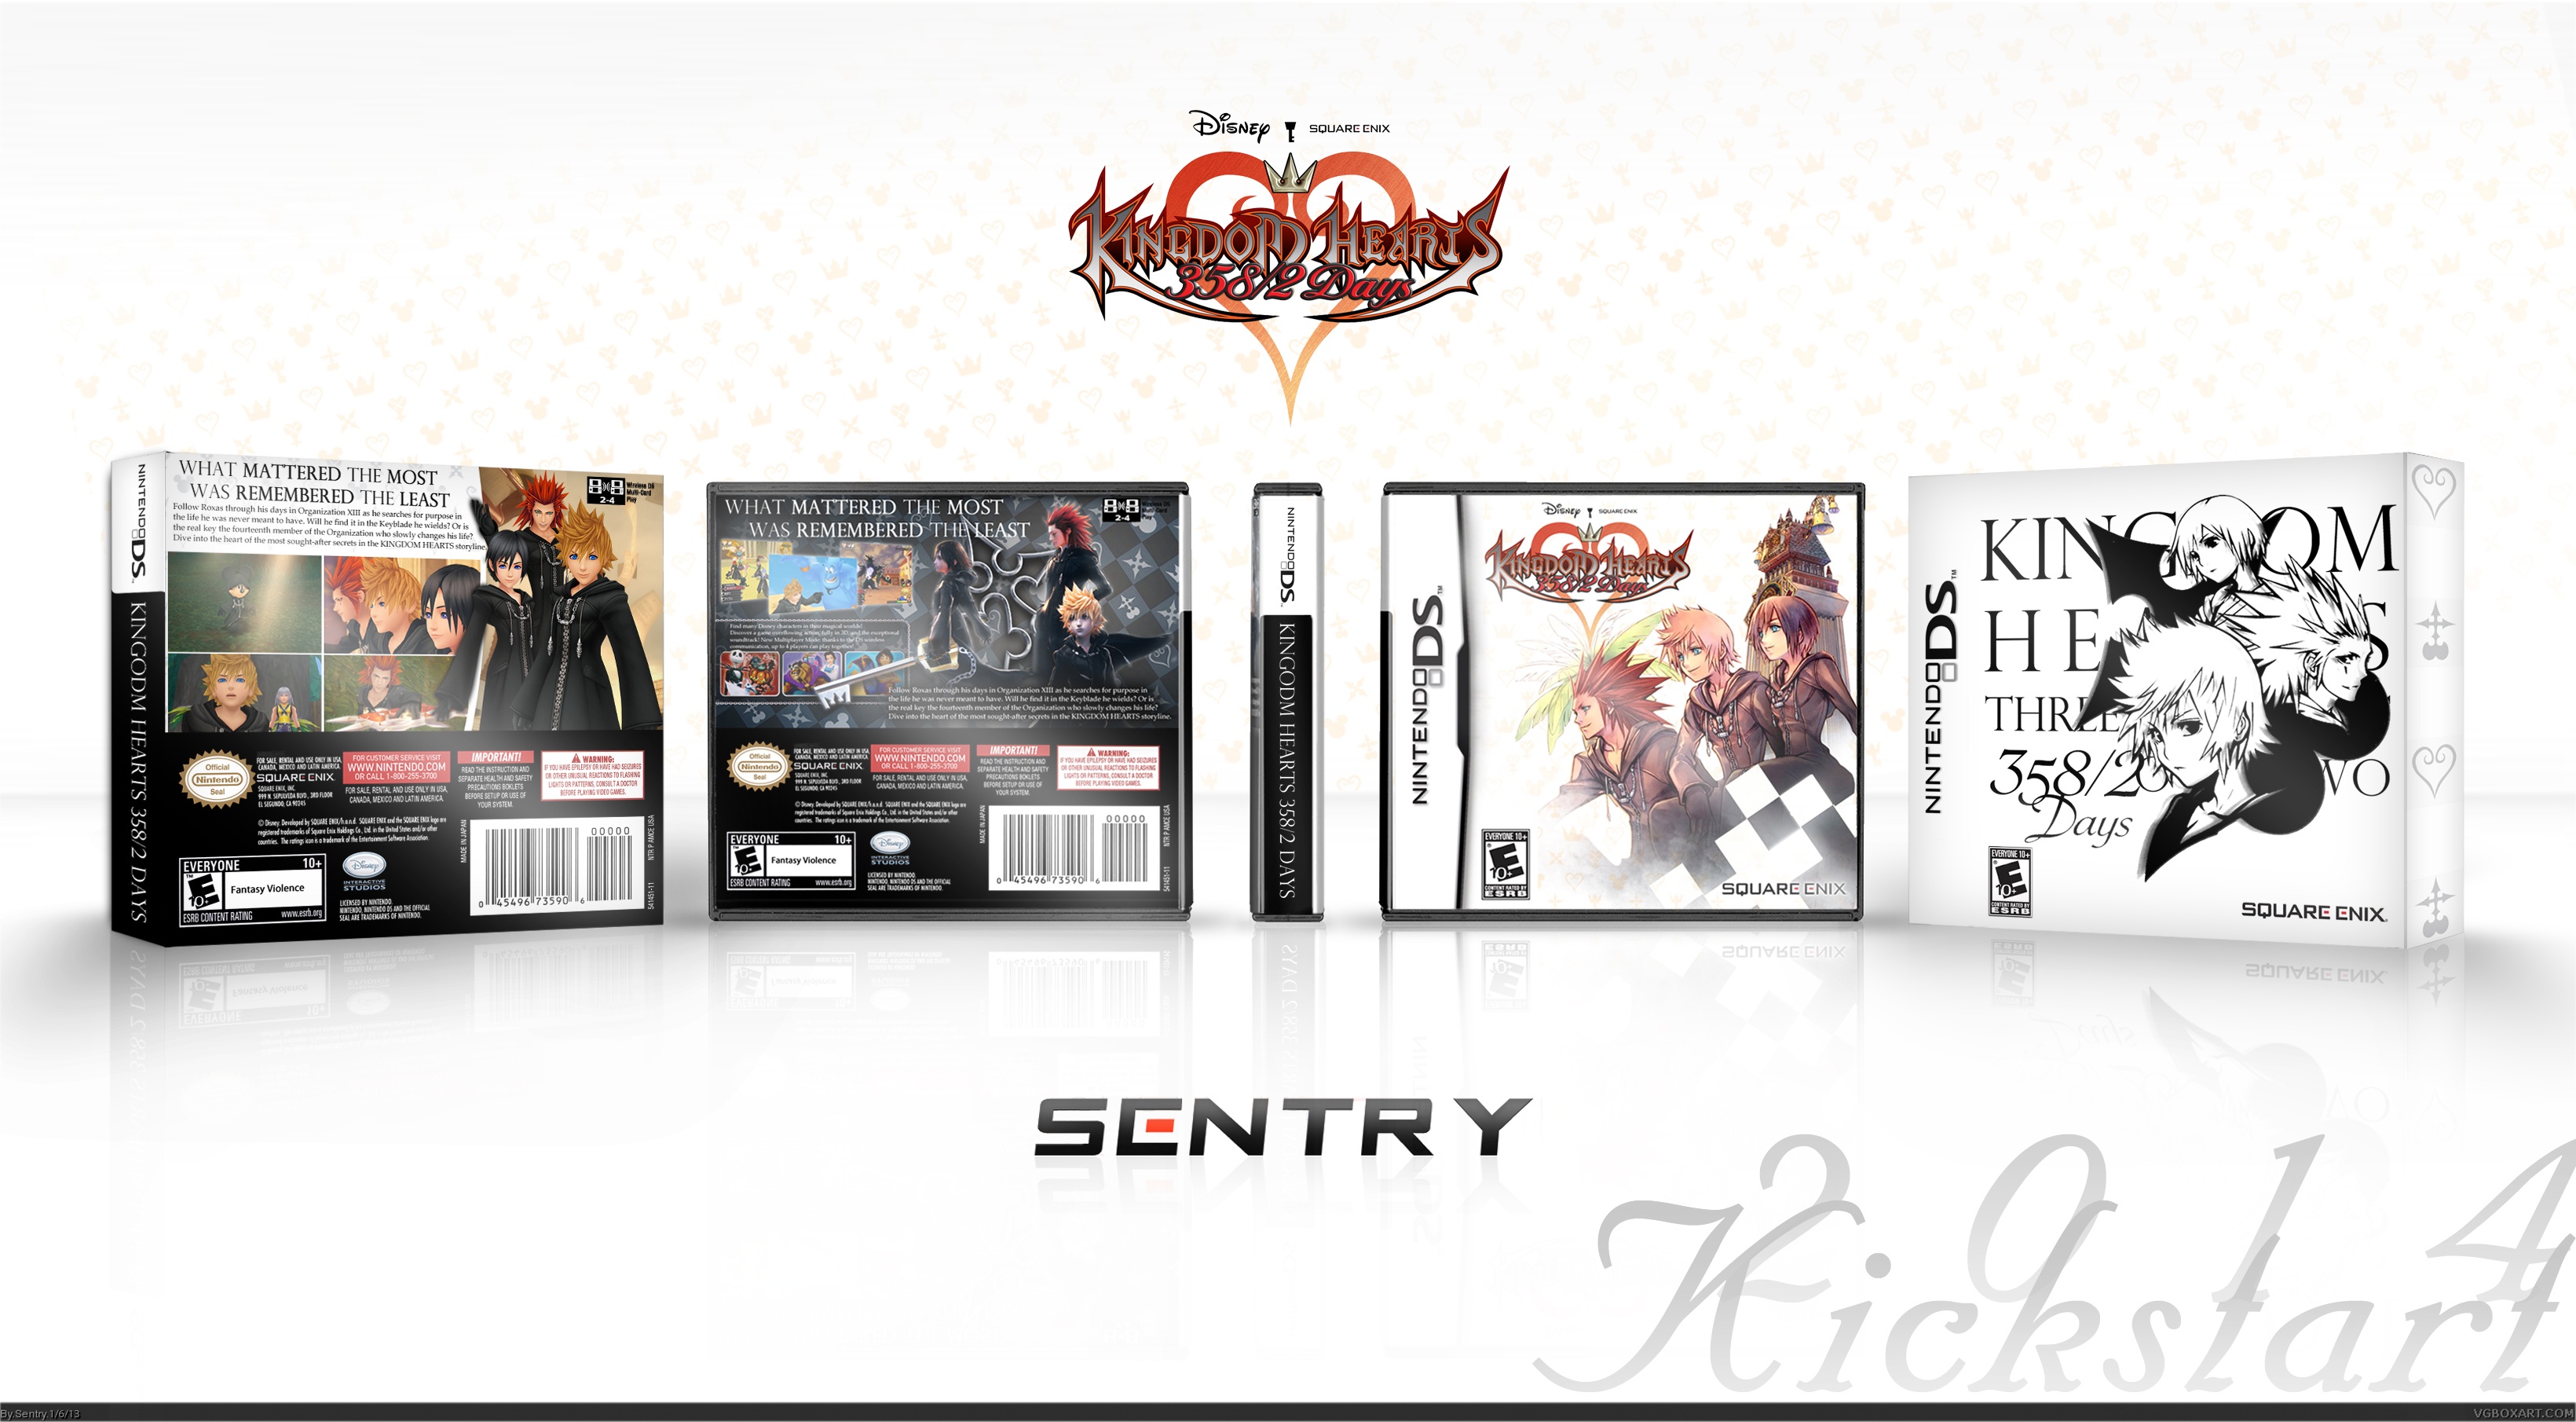 Kingdom Hearts 358/2 Days box cover